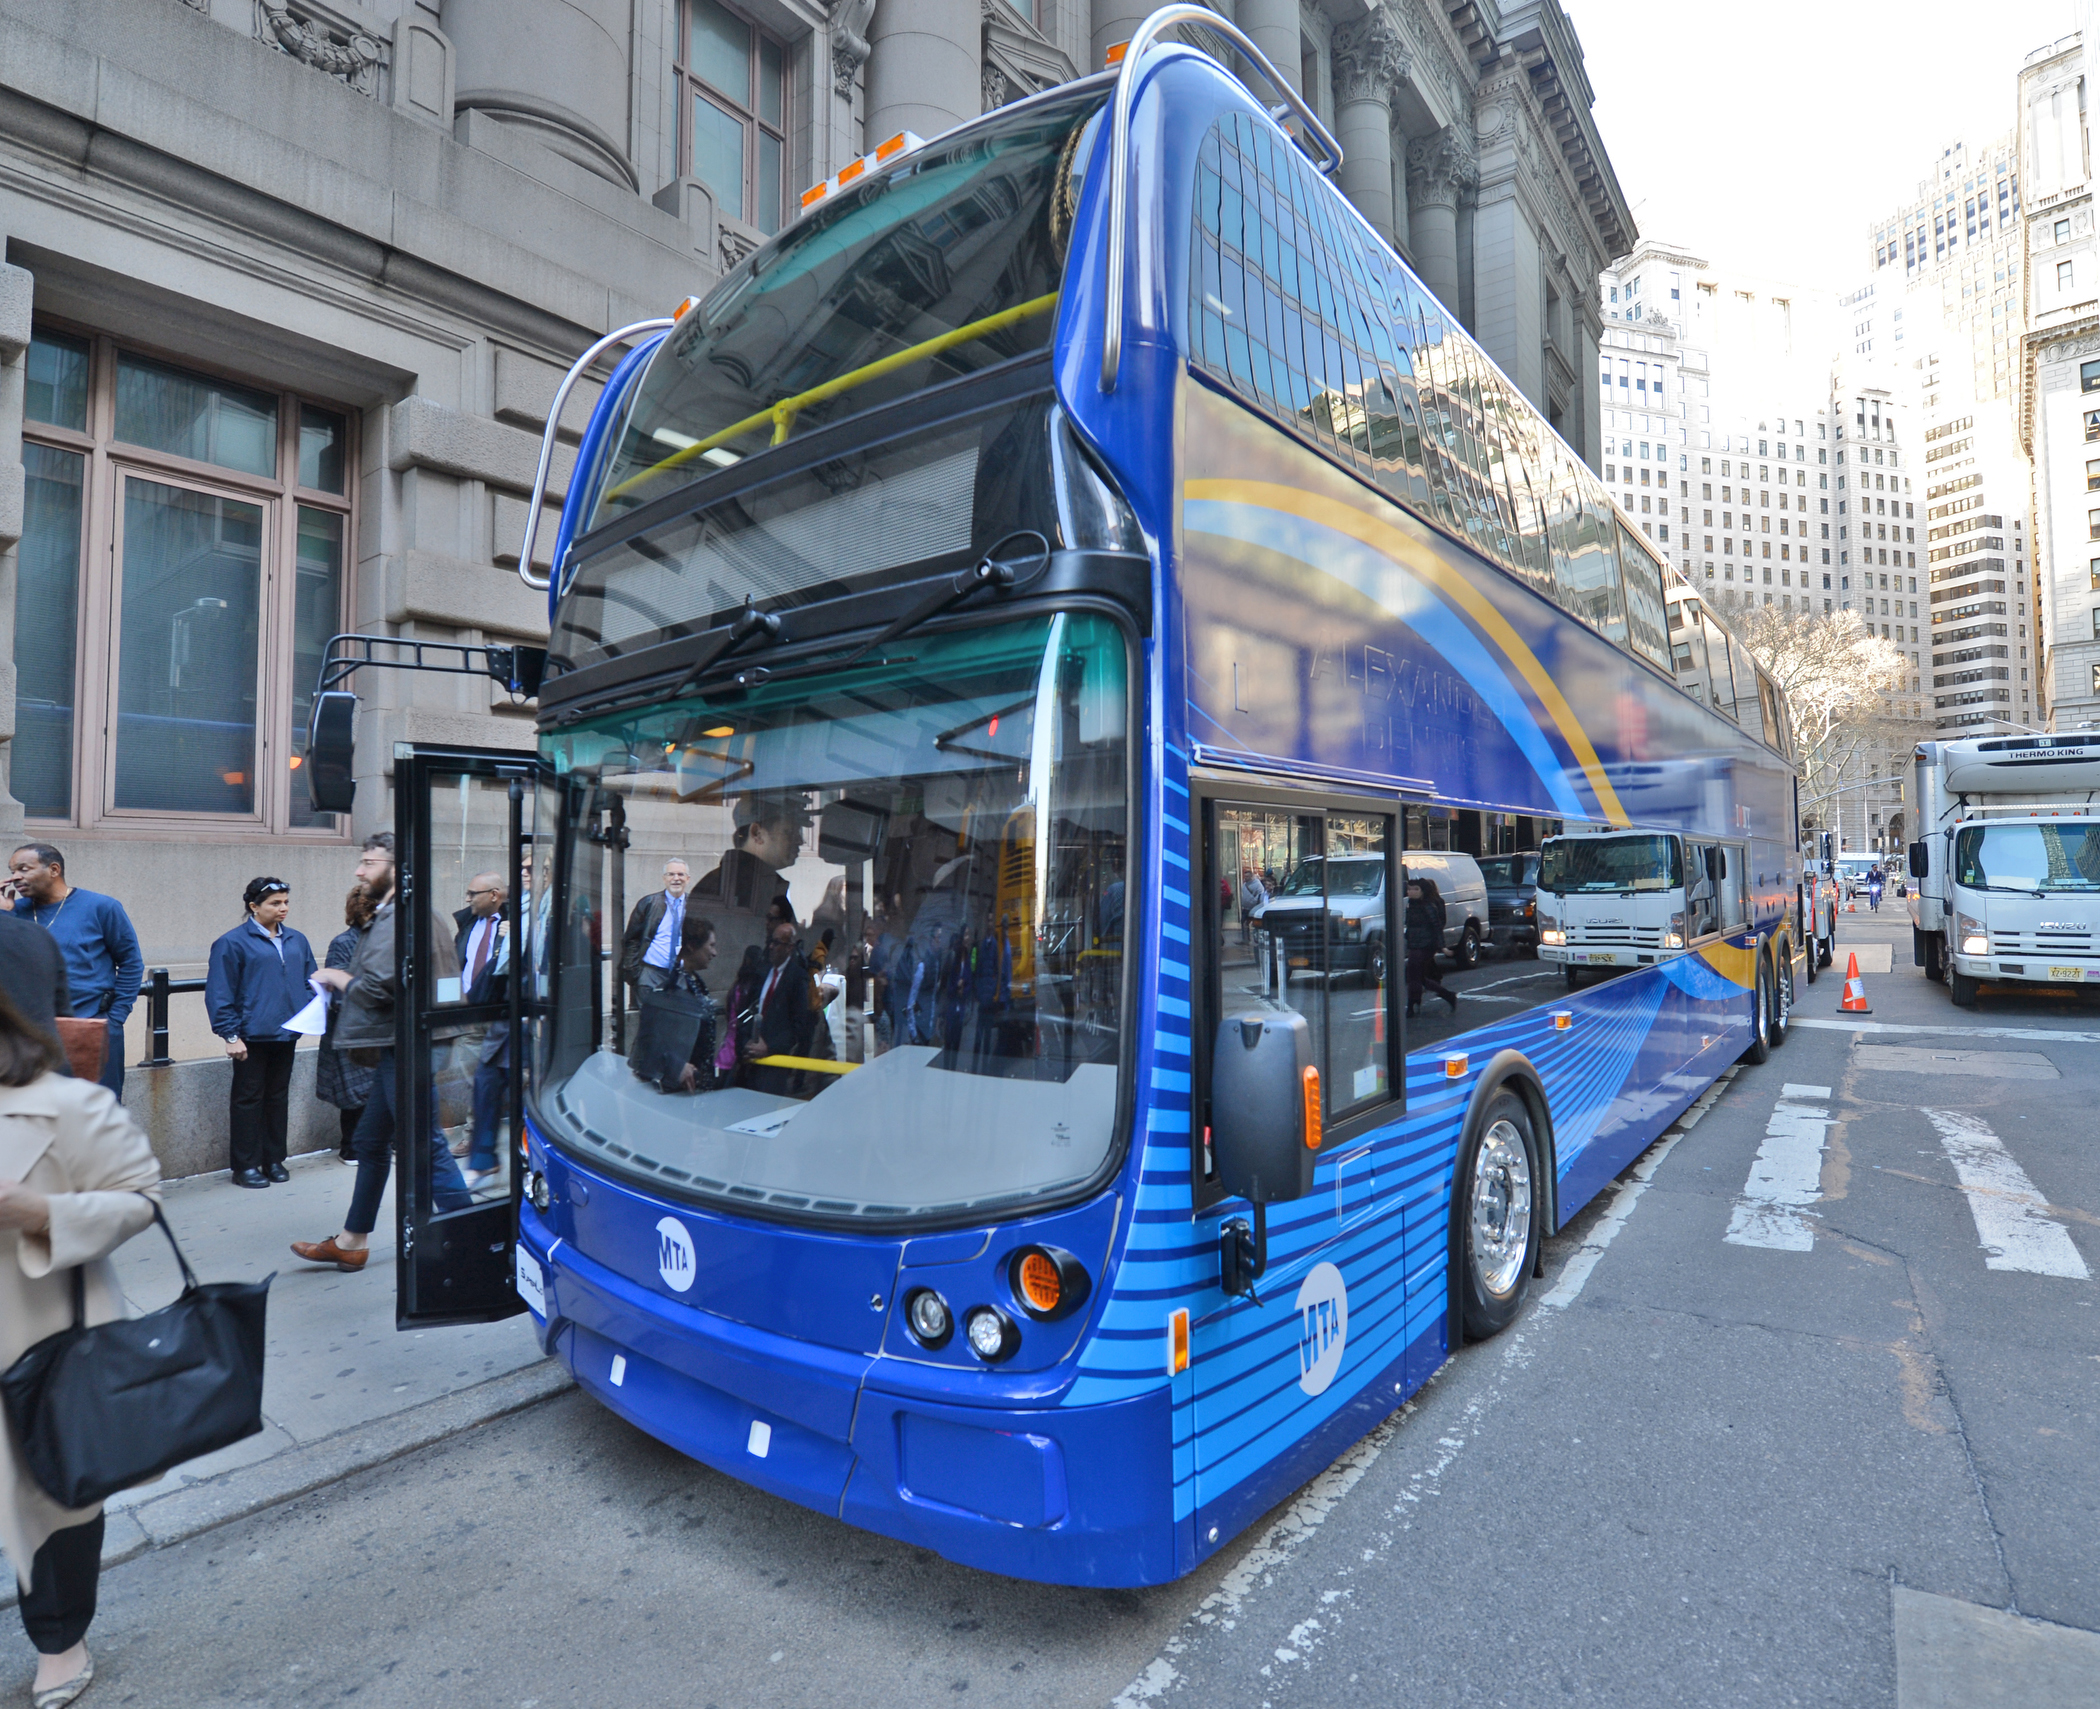 new york city buses